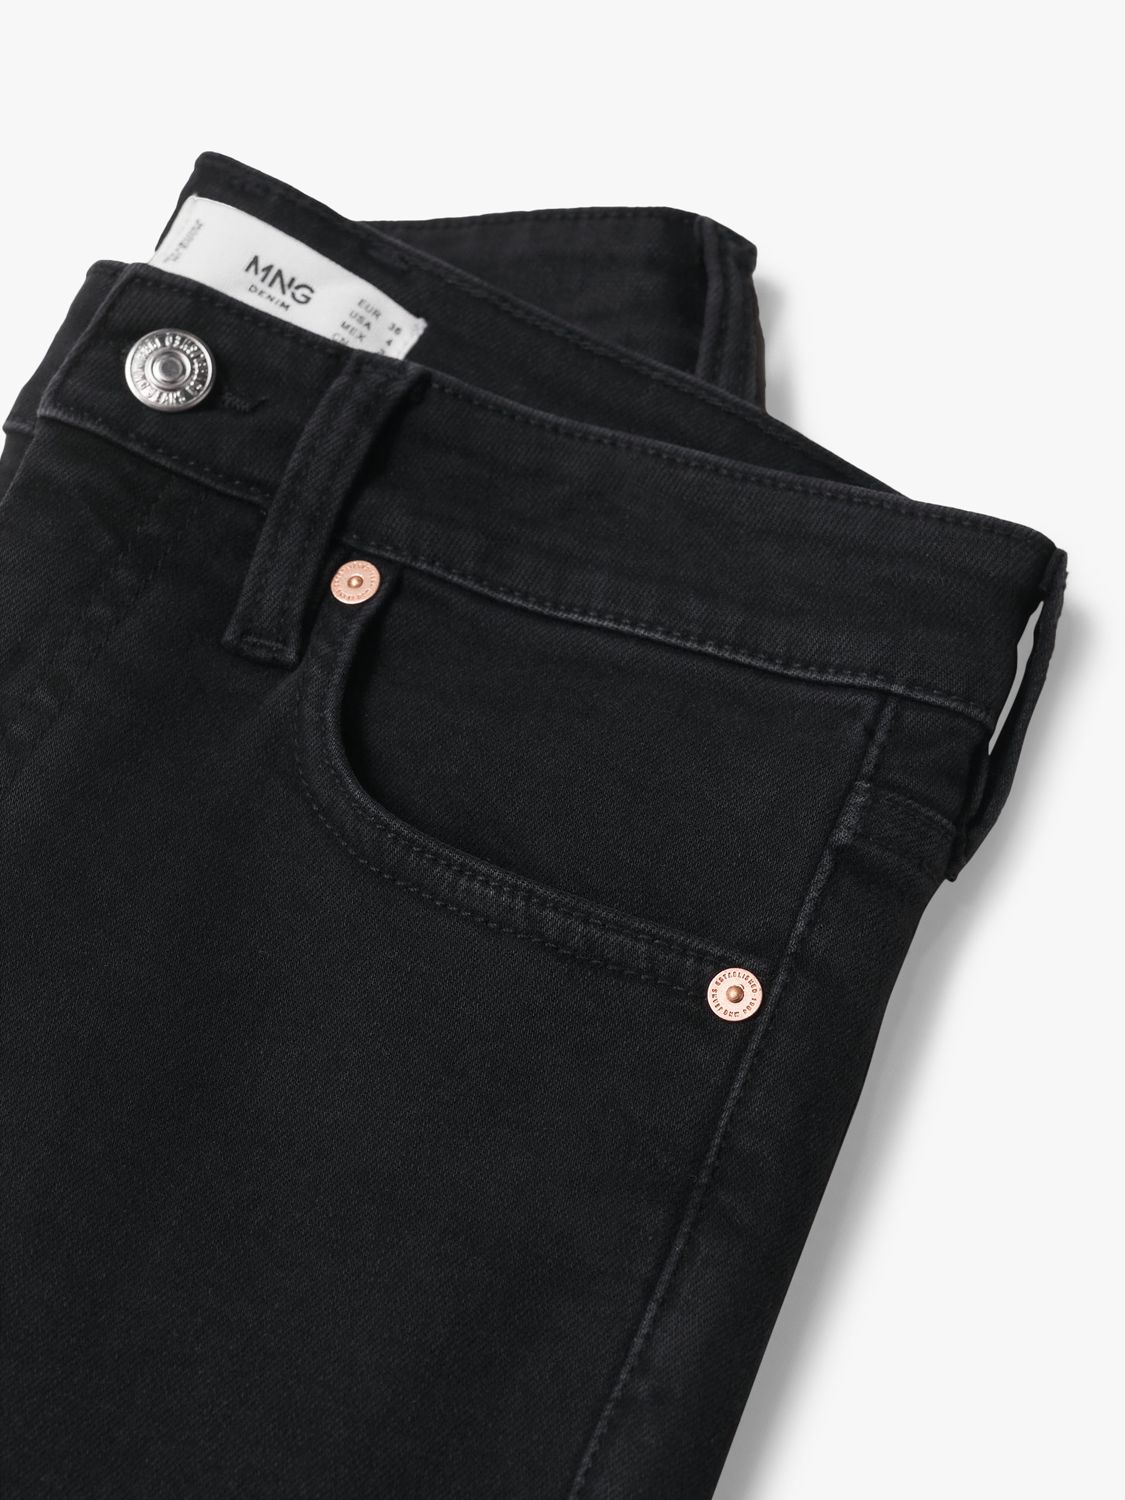 Mango Isa Crop Skinny Jeans, Black at John Lewis & Partners